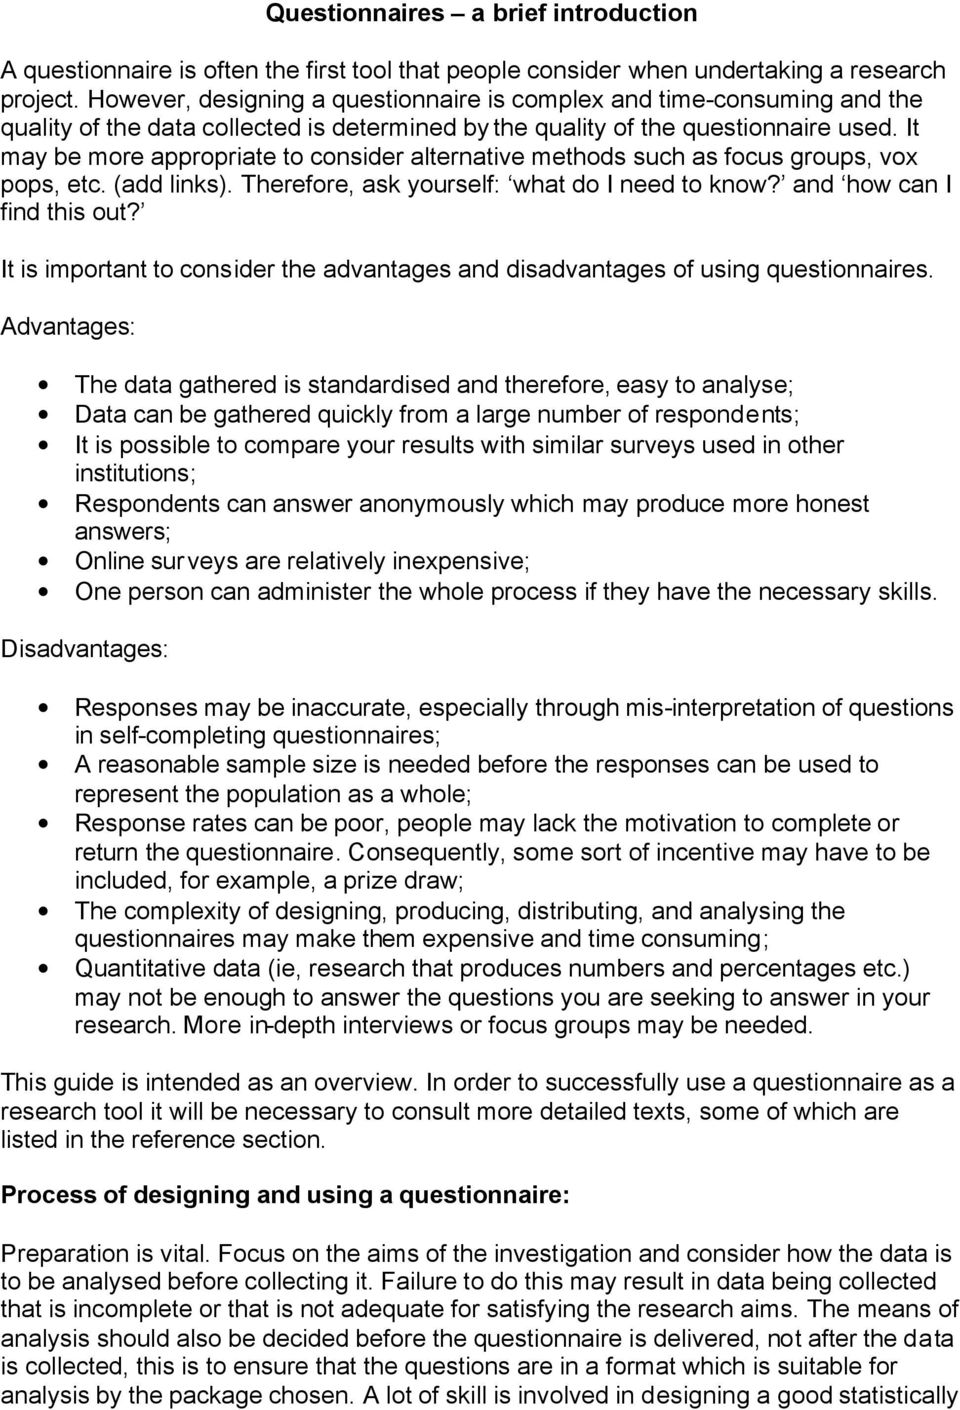 questionnaire advantages and disadvantages research method